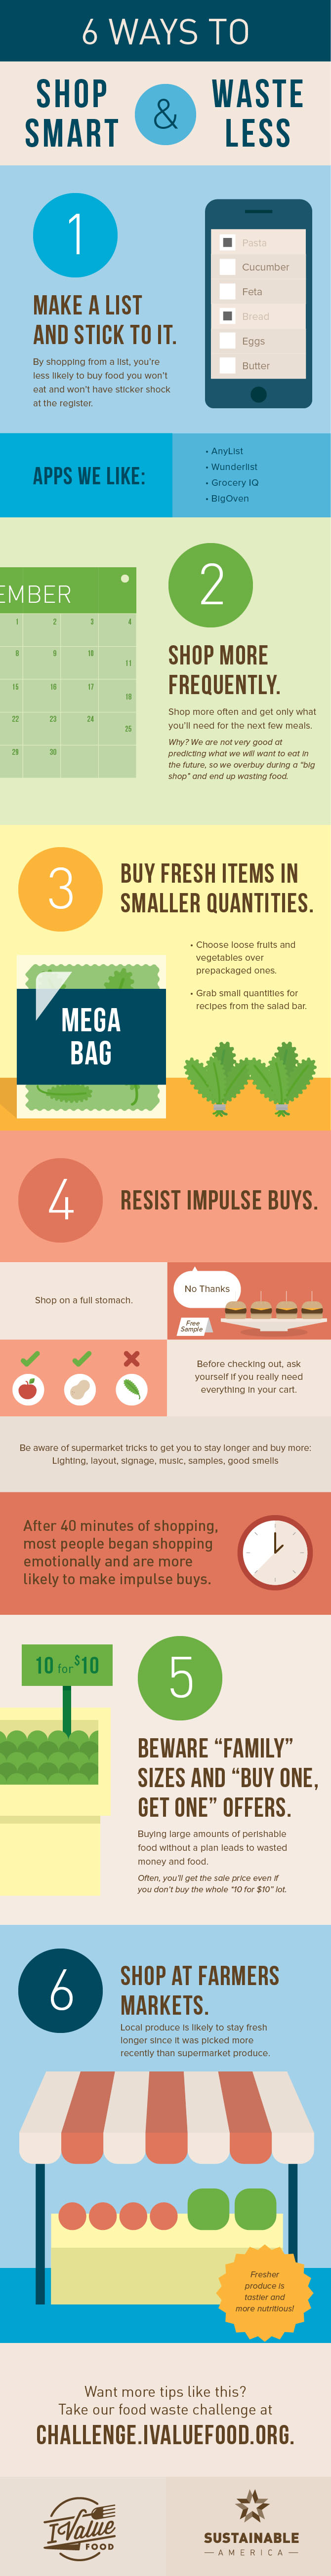 ShopSmart_WasteLess_infographic